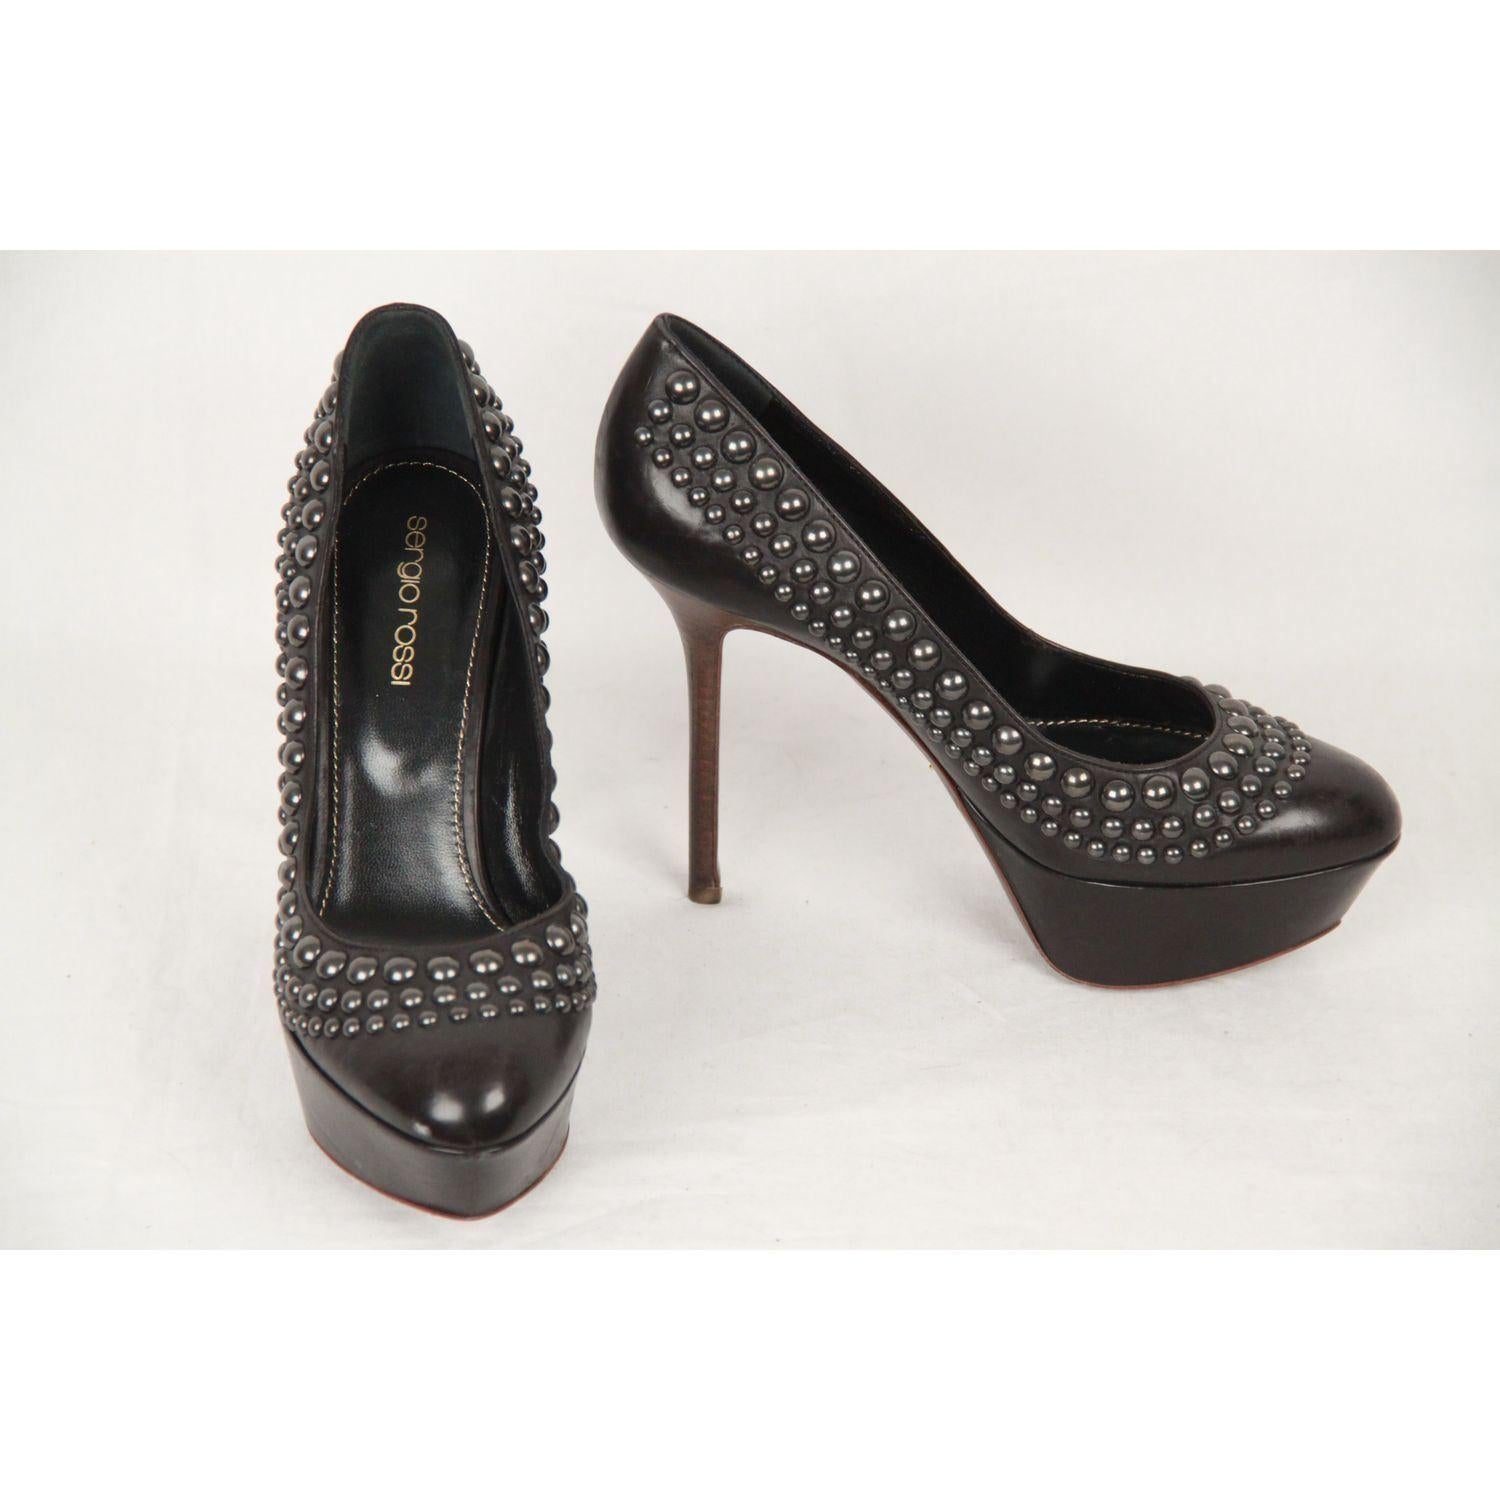 SERGIO ROSSI Black Leather Platform Heels STUDDED PUMPS Shoes SIZE 36 2